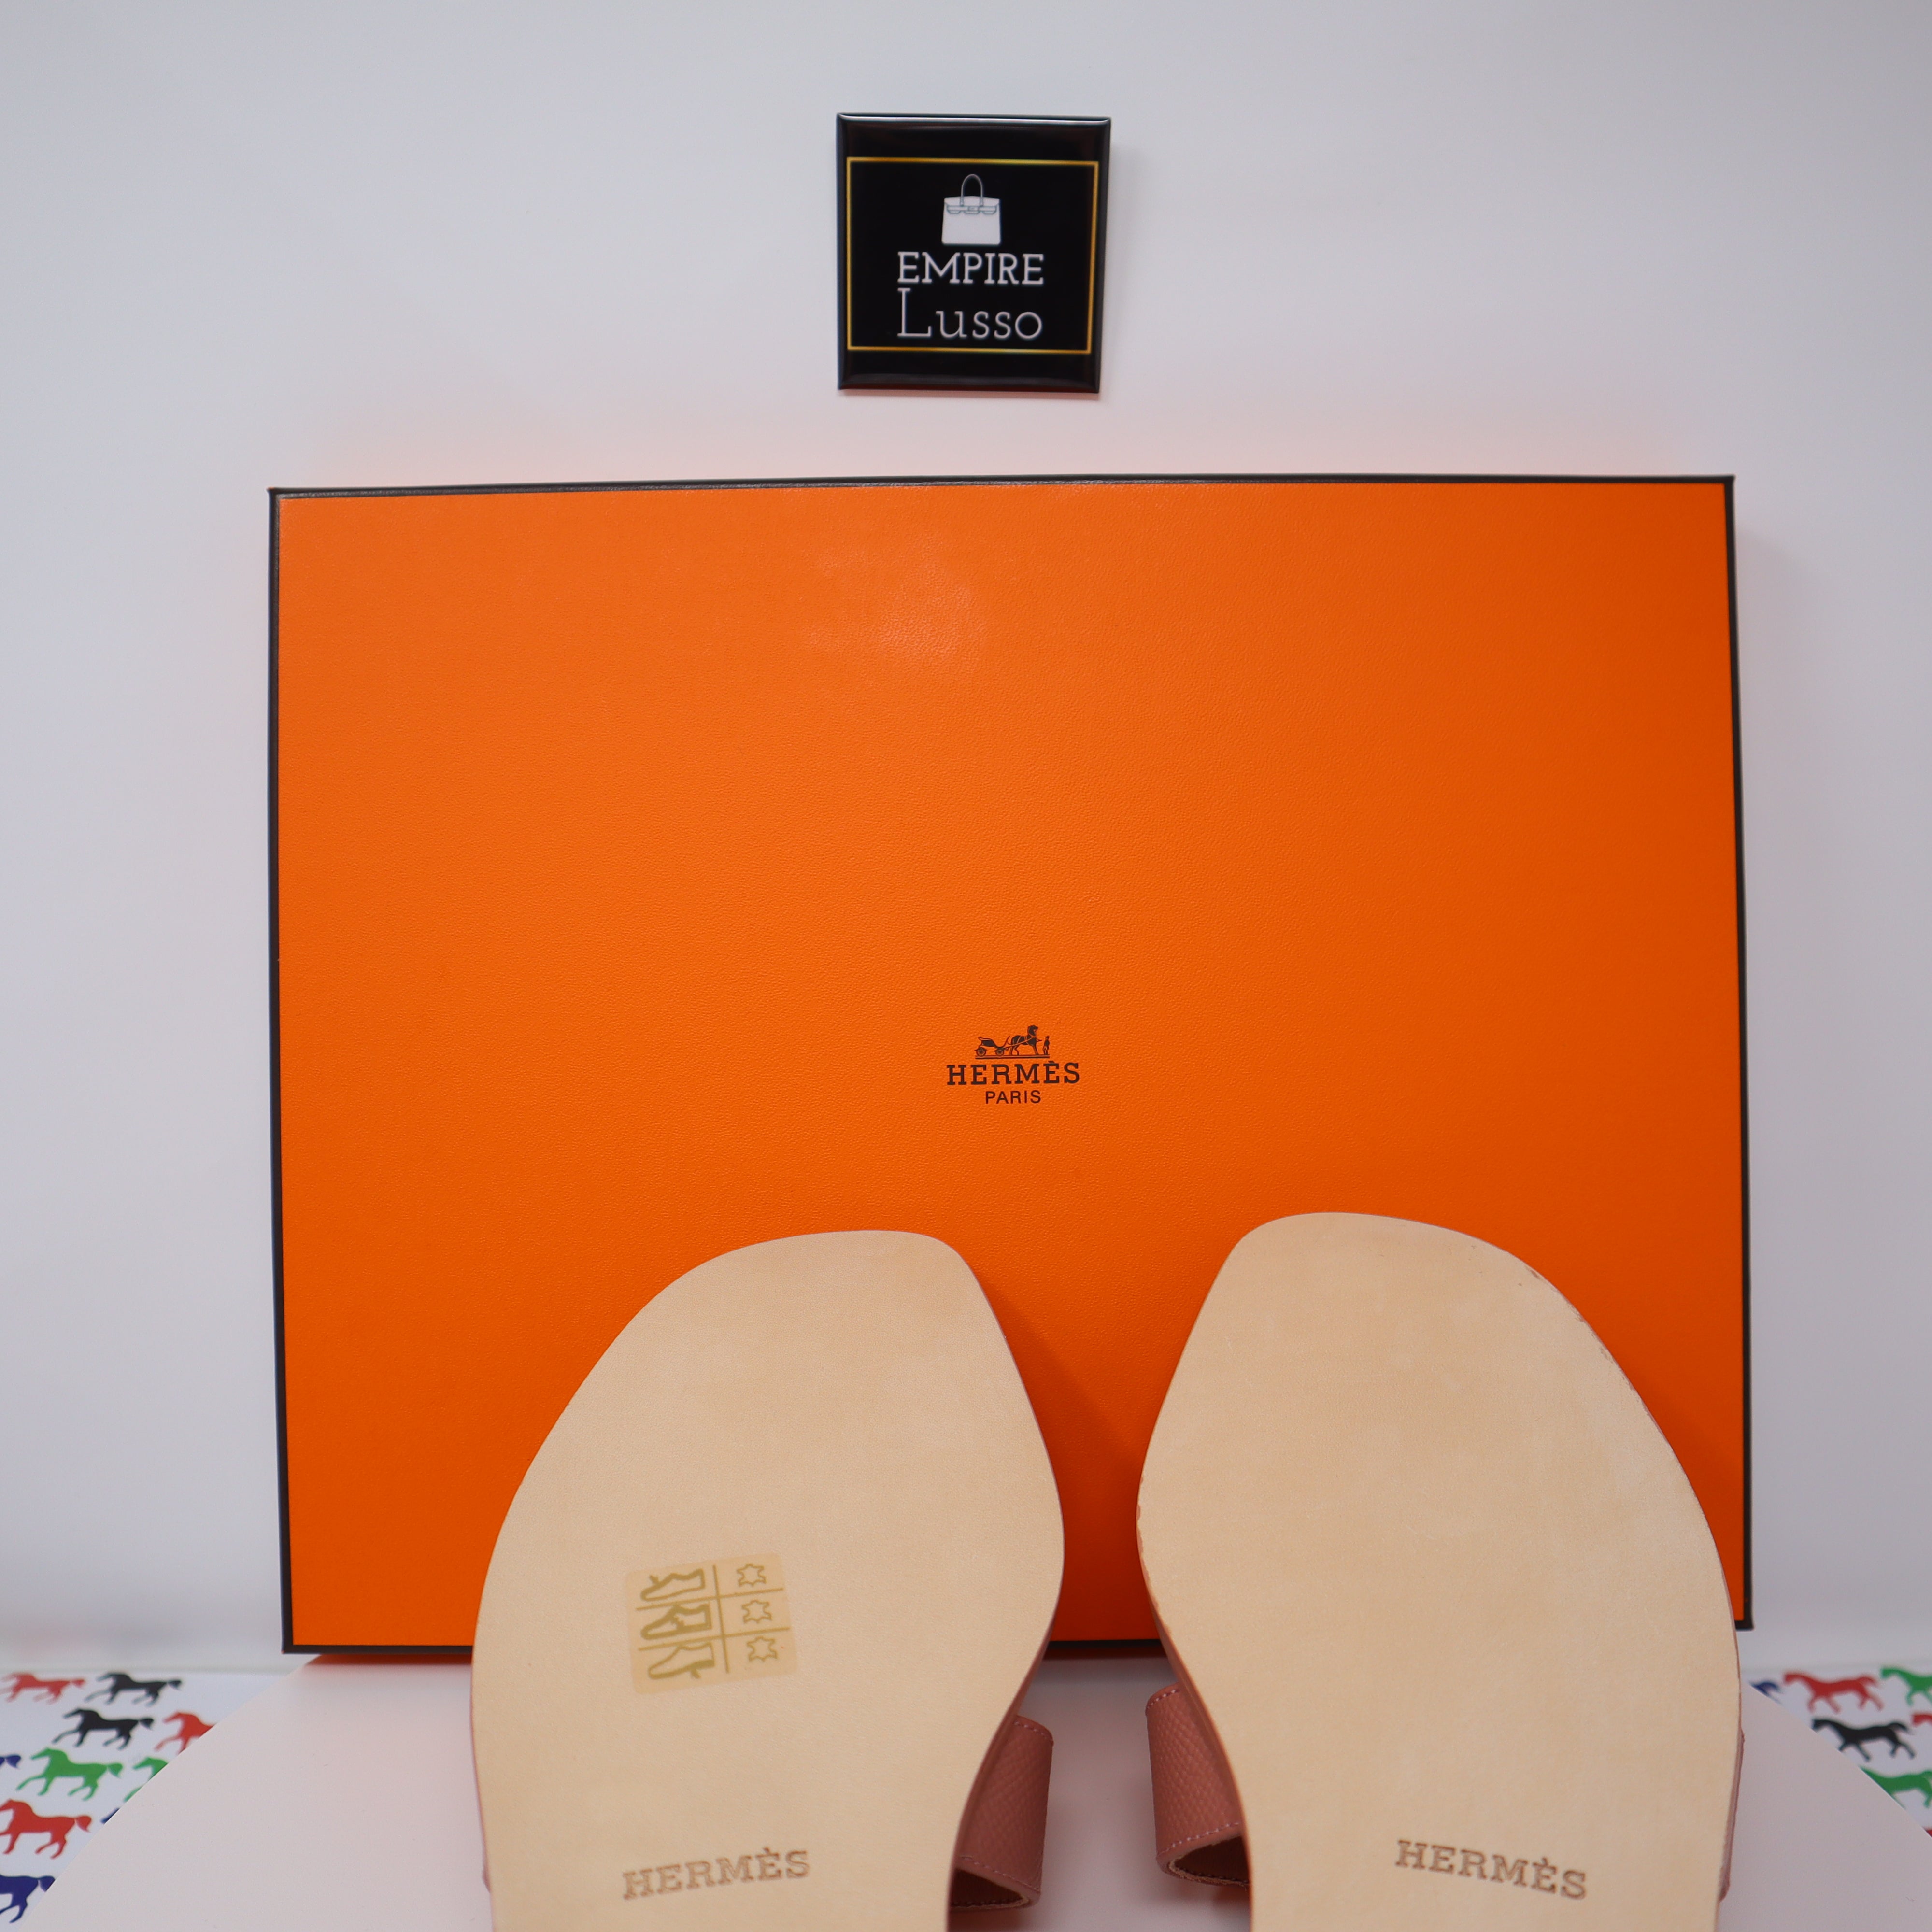 Hermès Oran Sandals in Etoupe Size 38 – Coco Approved Studio